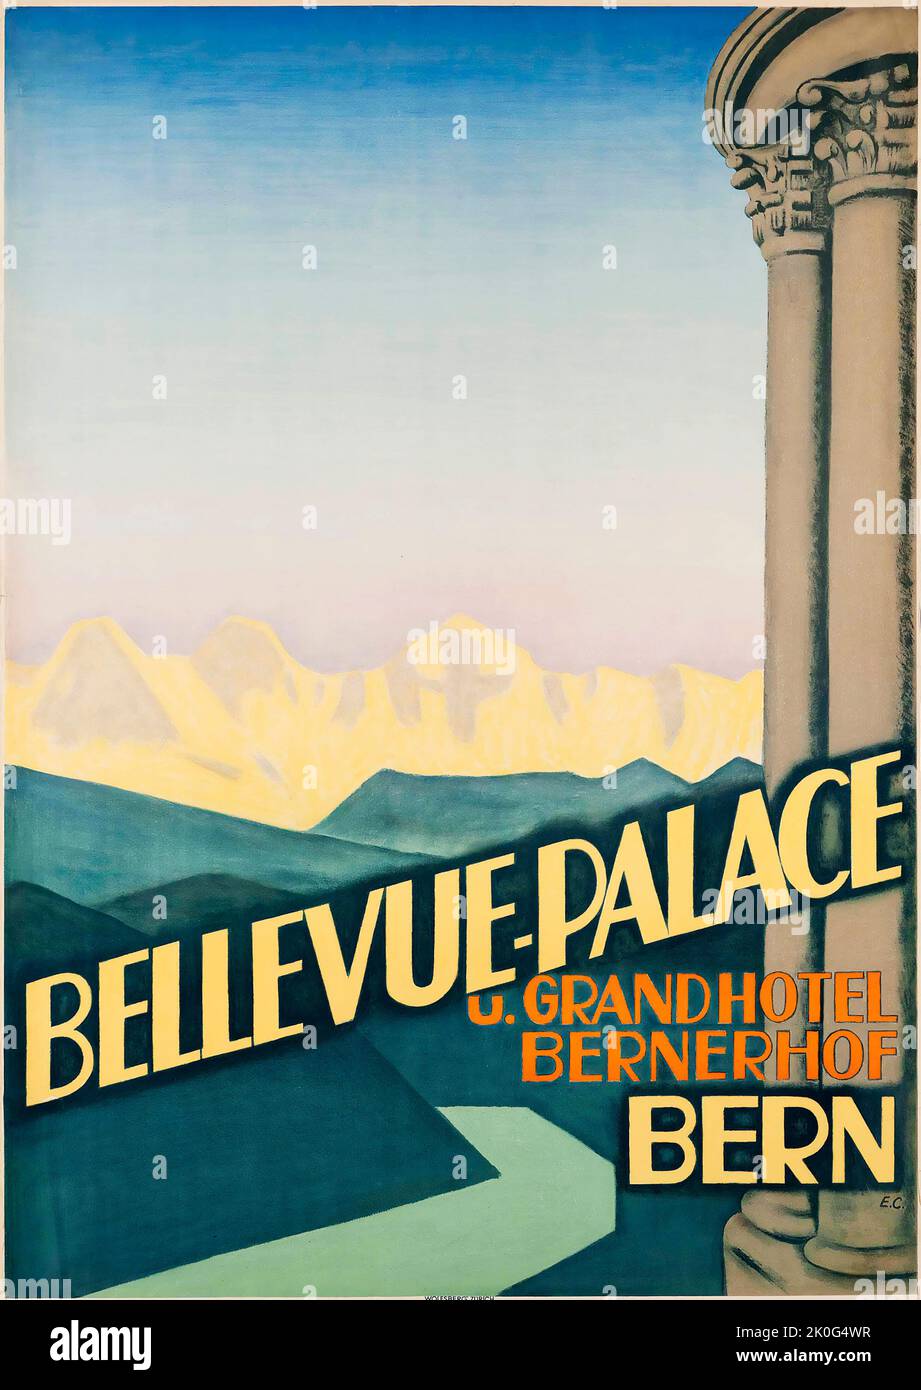 Artiste anonyme - BELLEVUE-PALACE Grand Hotel Bernerhof, BERNE, Suisse, Suisse, c 1932 Banque D'Images